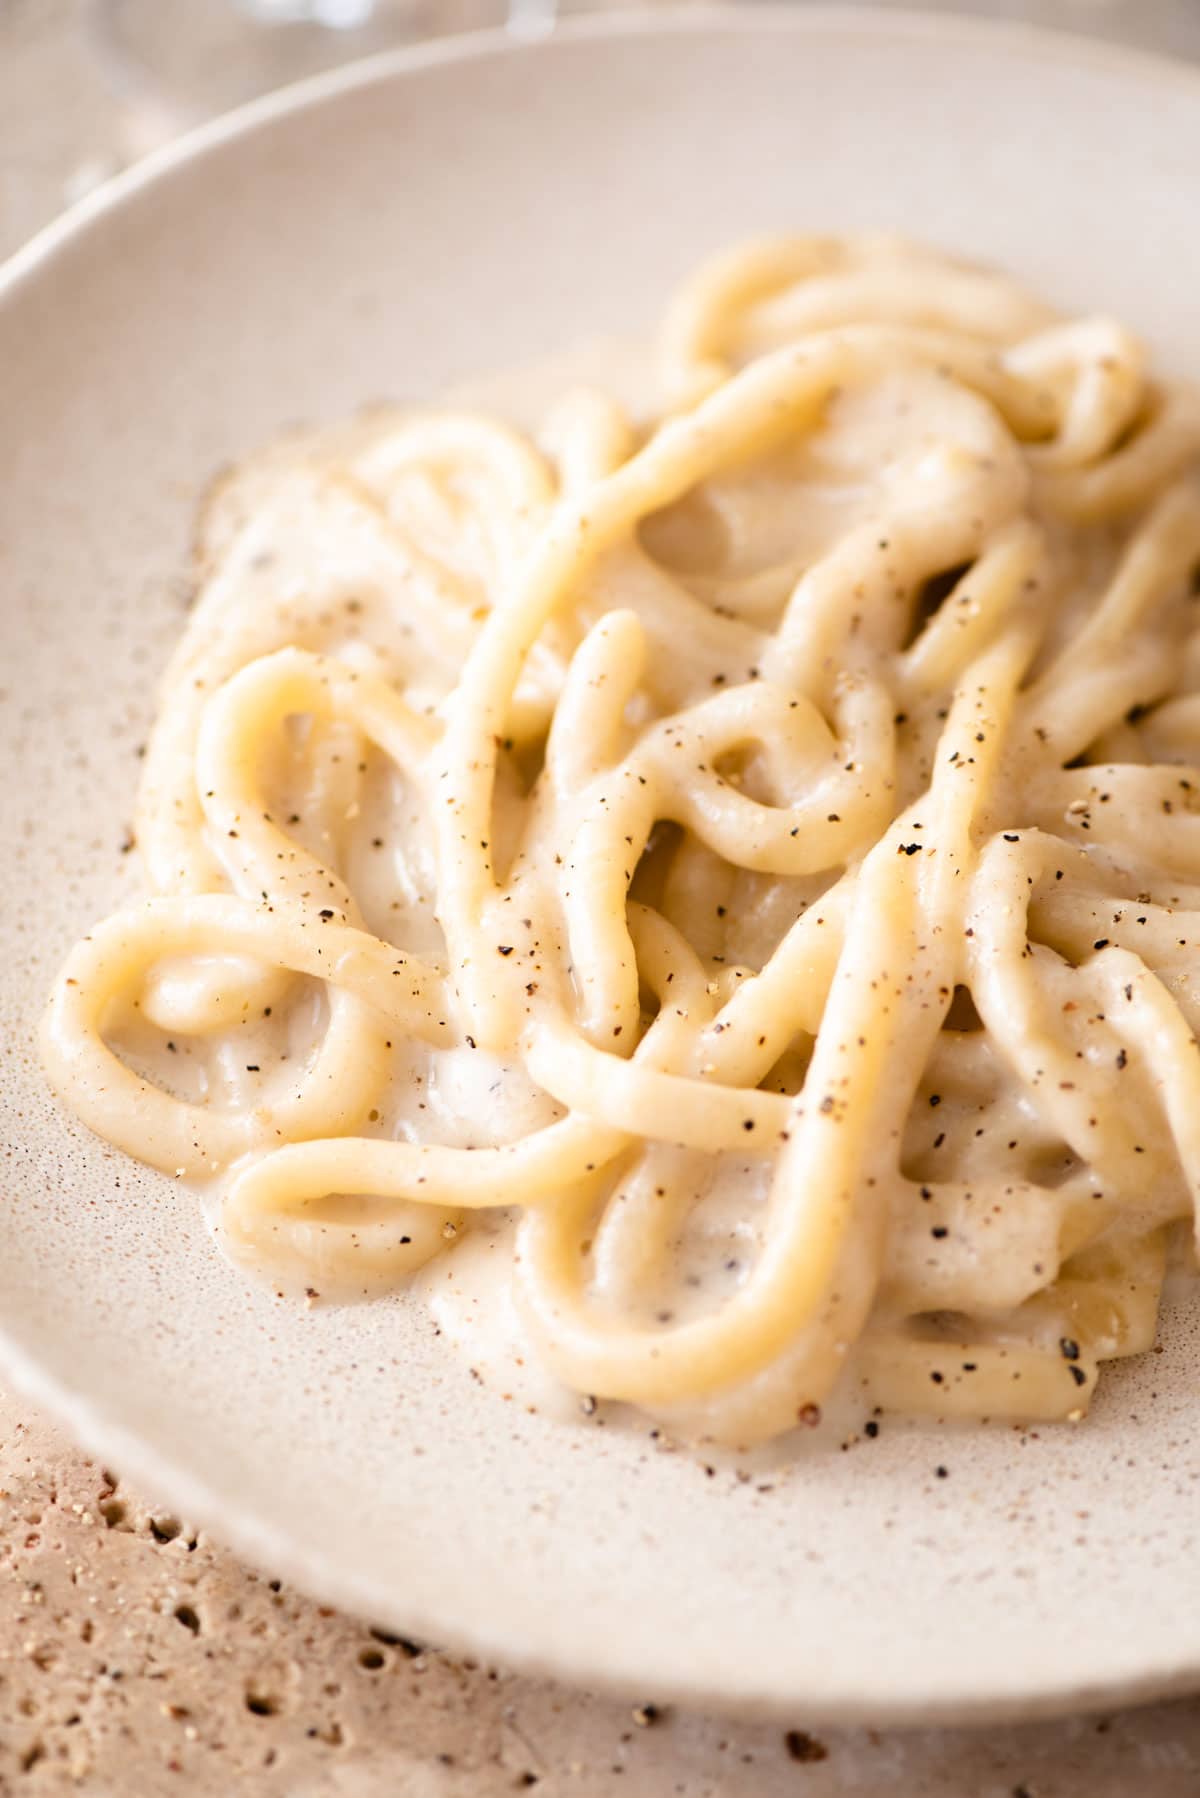 A close up of pici pasta with cacio e pepe sauce on a plate